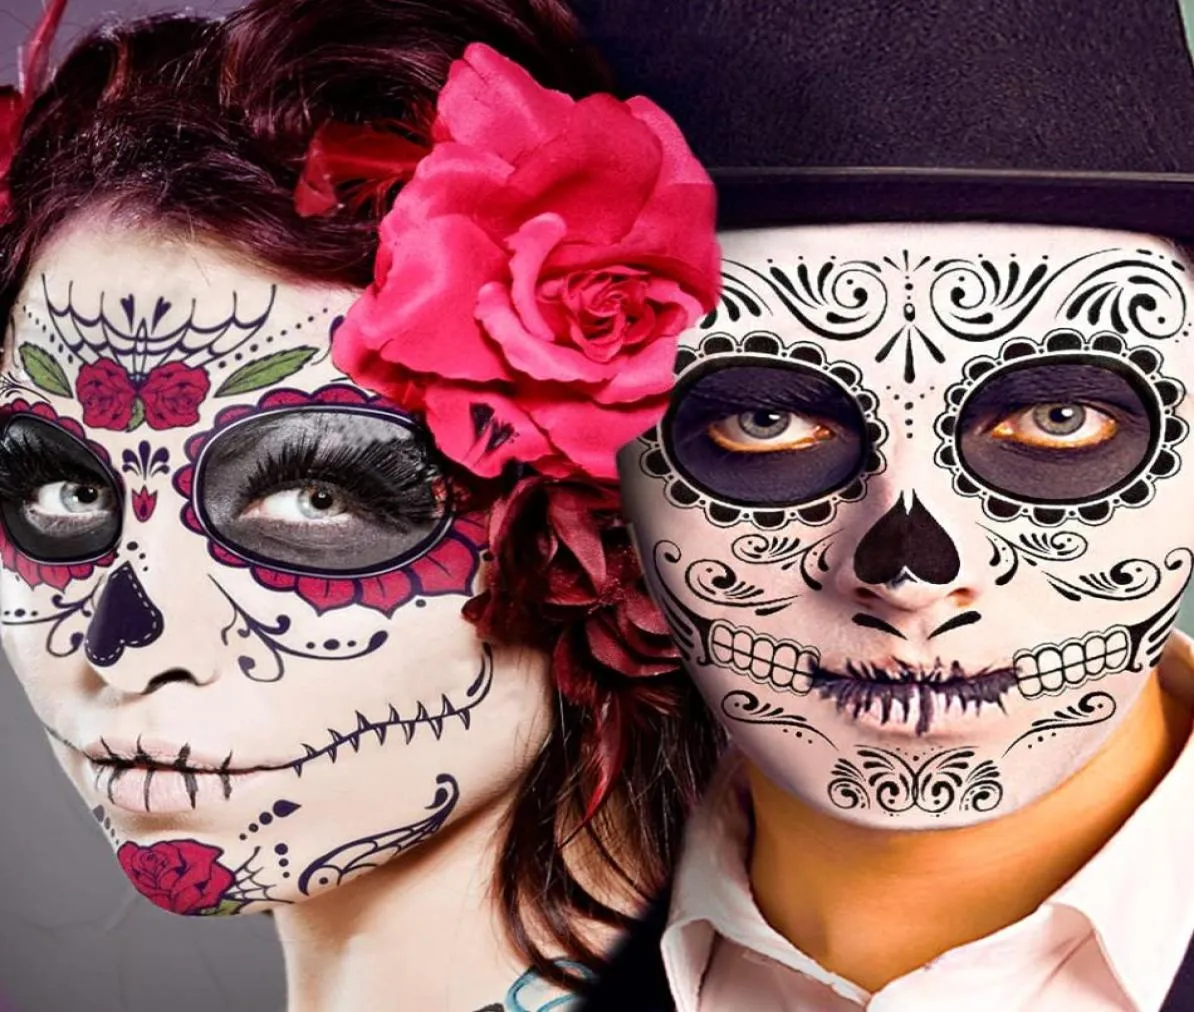 Dao of the Dead Face Tattoos 10 Sheet Halloween 임시 스티커 키트 Dia de Los Muertos 반짝이 빨간 장미 Skeleton 설탕 두개골 FA9607949